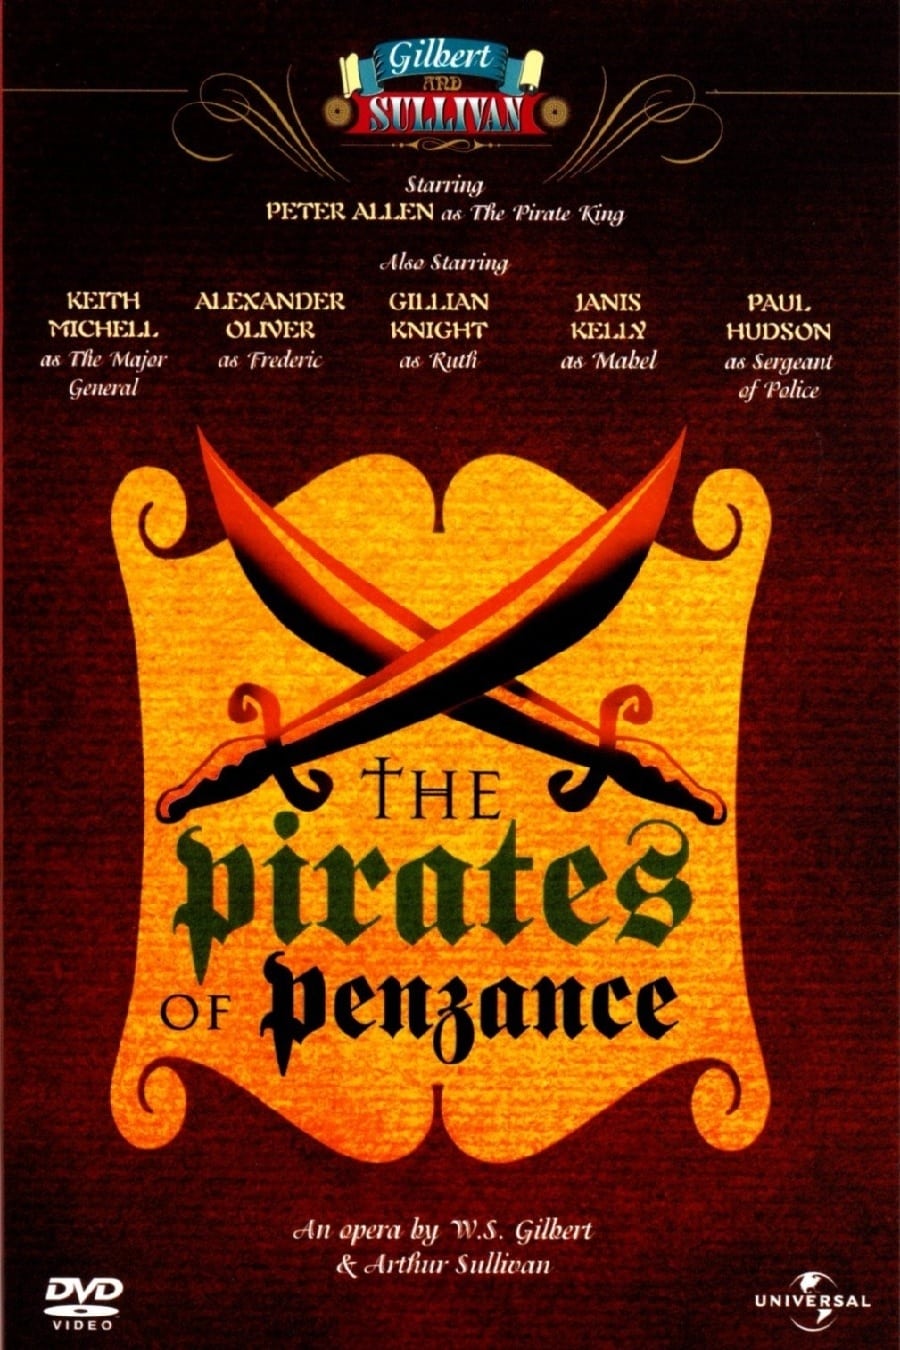 The Pirates Of Penzance (1982)